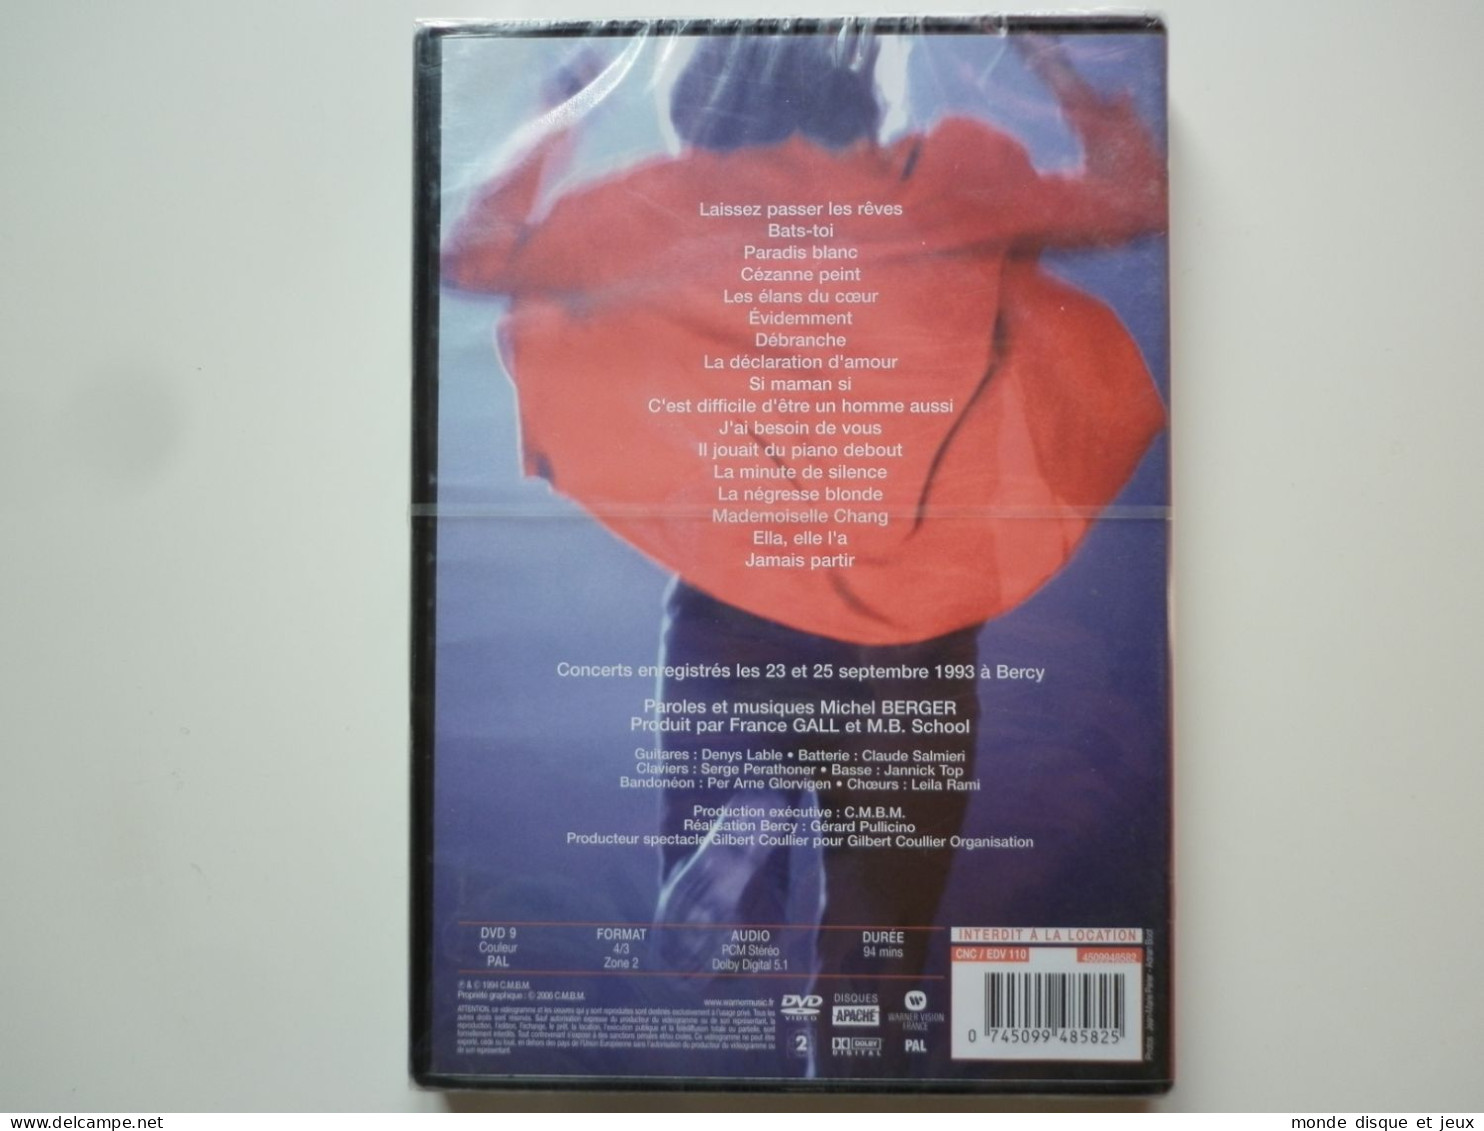 France Gall Dvd Bercy 93 - Music On DVD